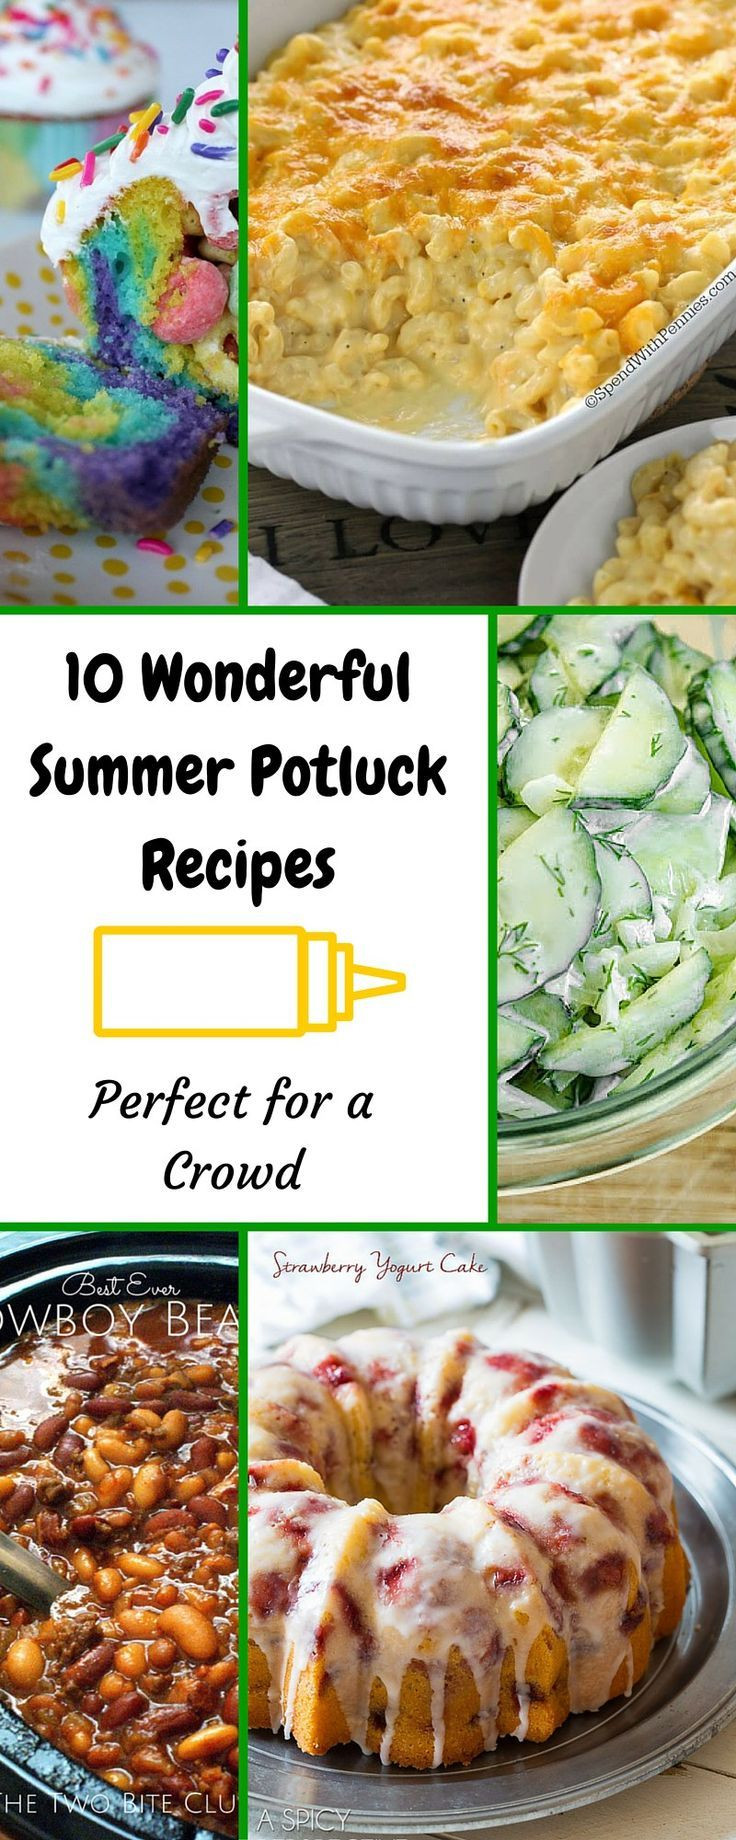 Potluck Side Dishes For Summer
 100 Potluck Recipes Summer on Pinterest